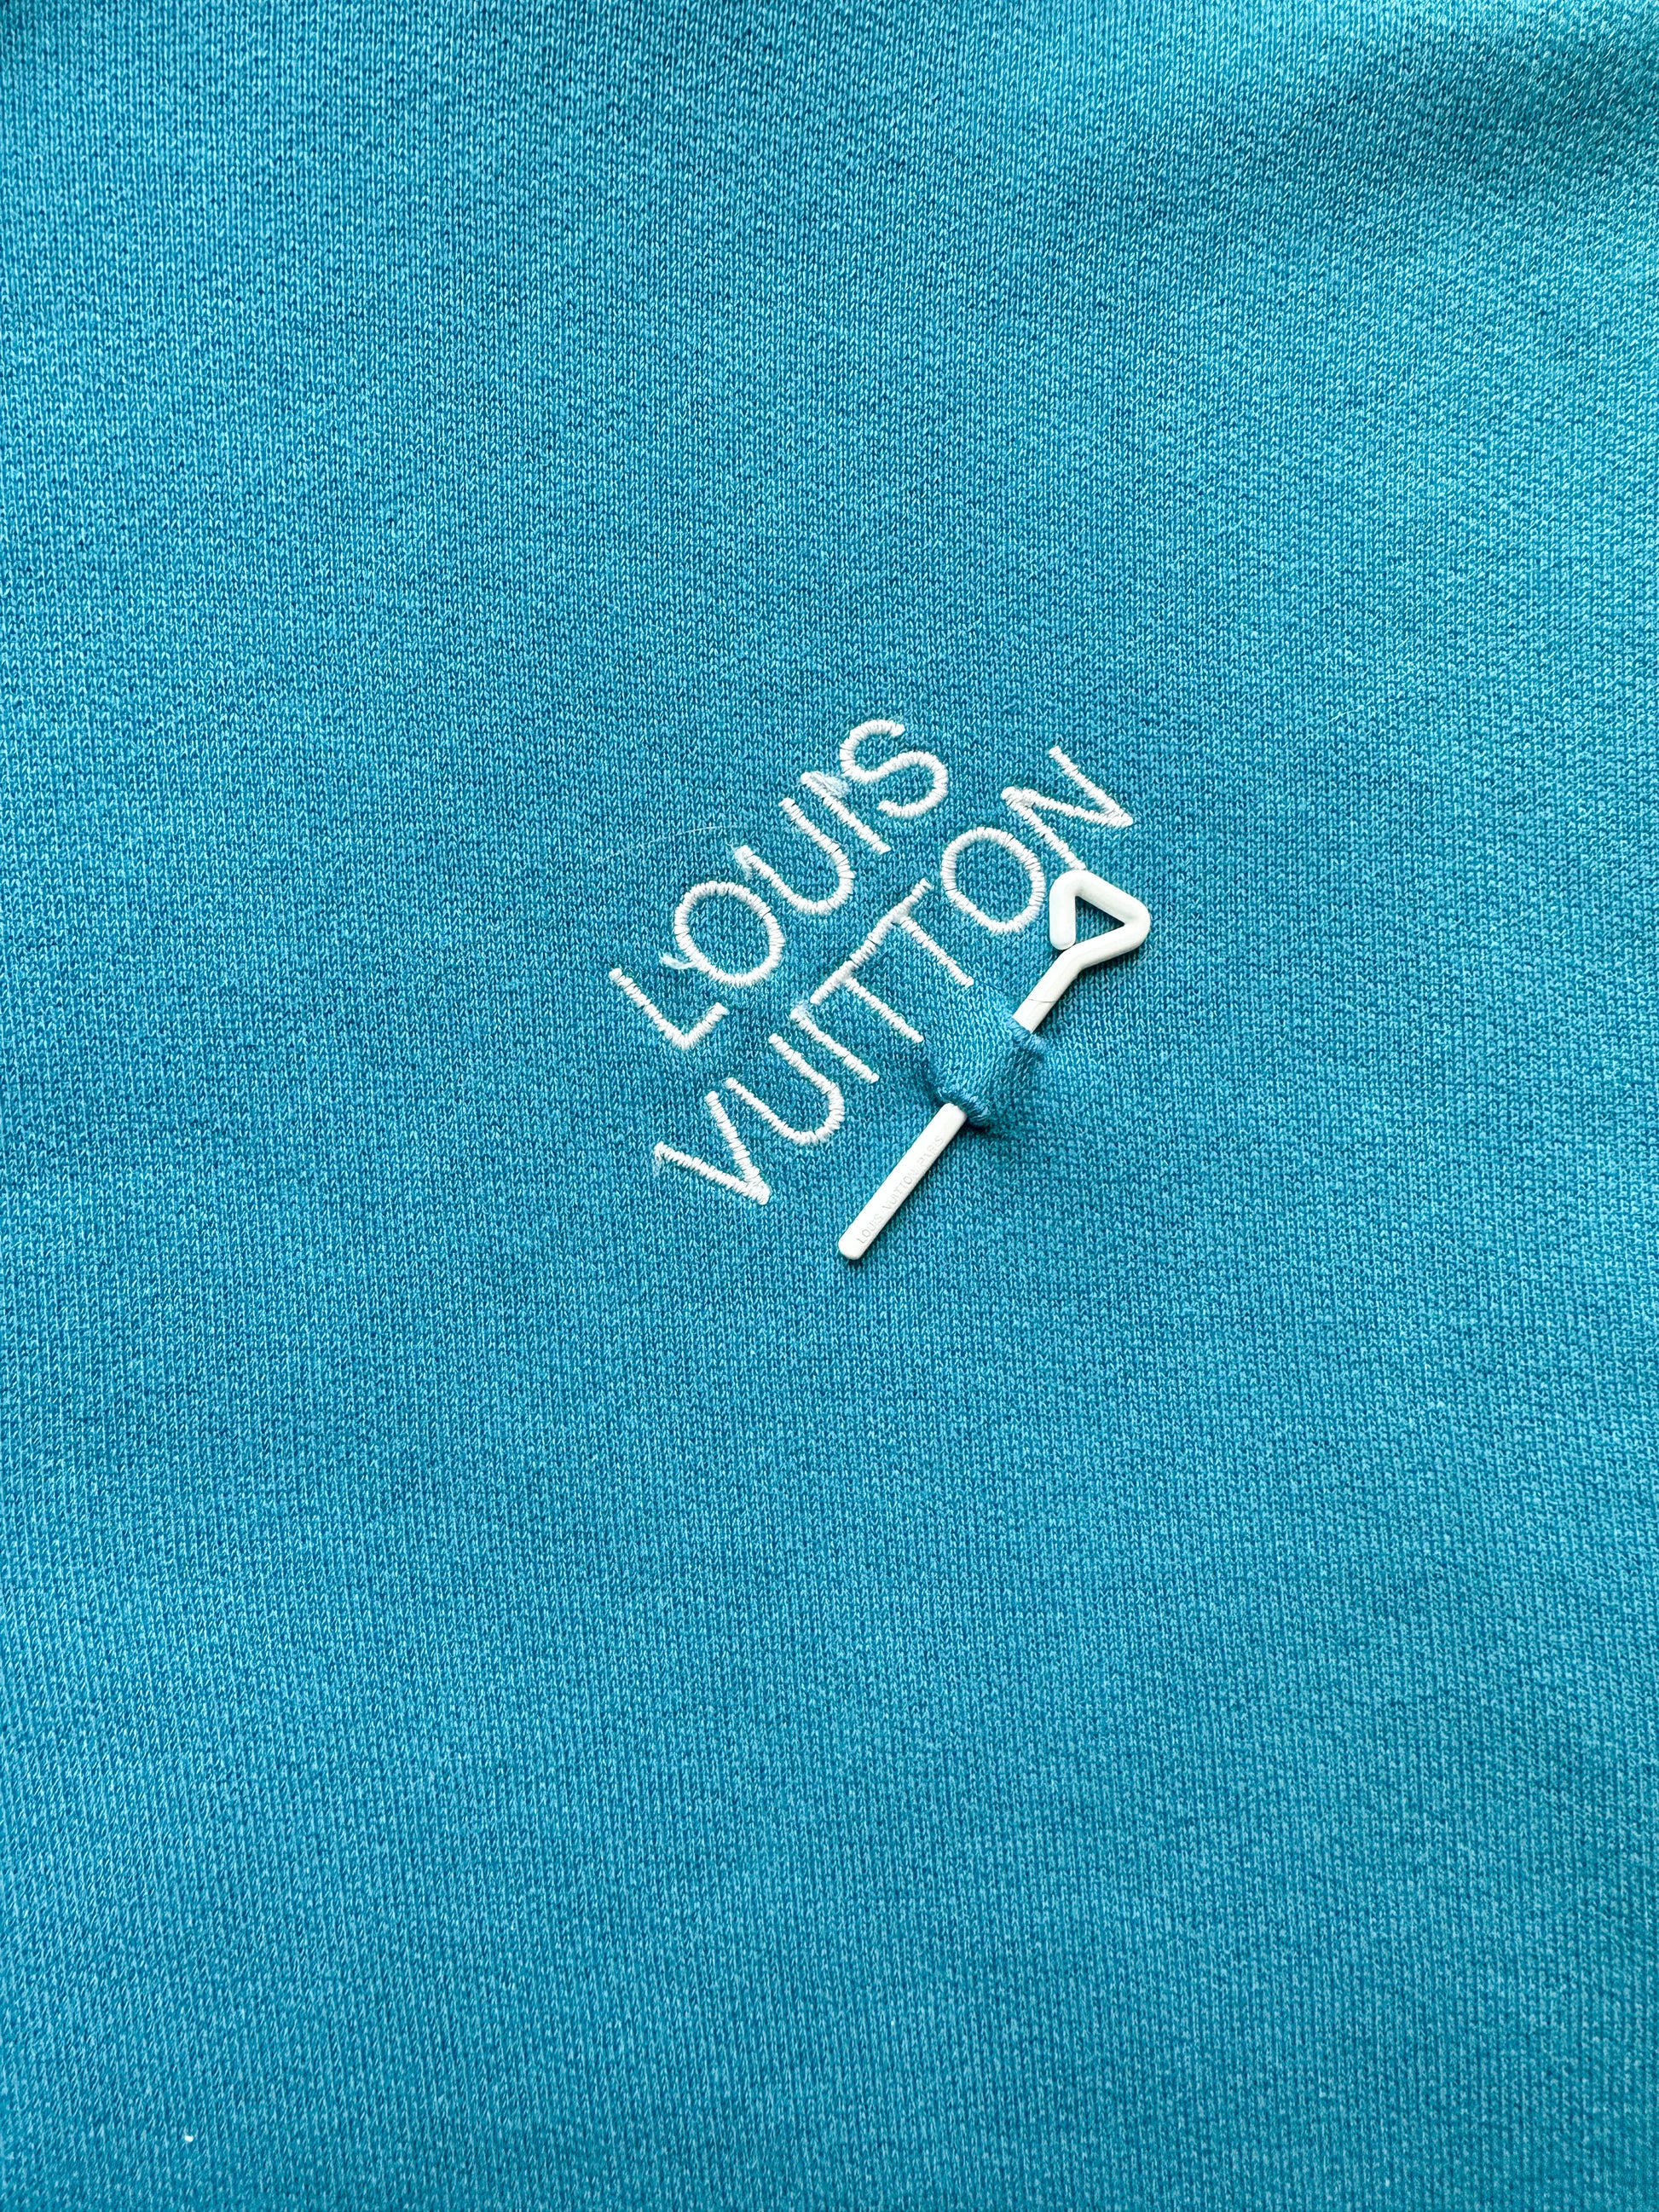 Louis VUITTON Signature Hoodie Embroidered Ocean Blue Size 5L fits 58-60,  Cotton